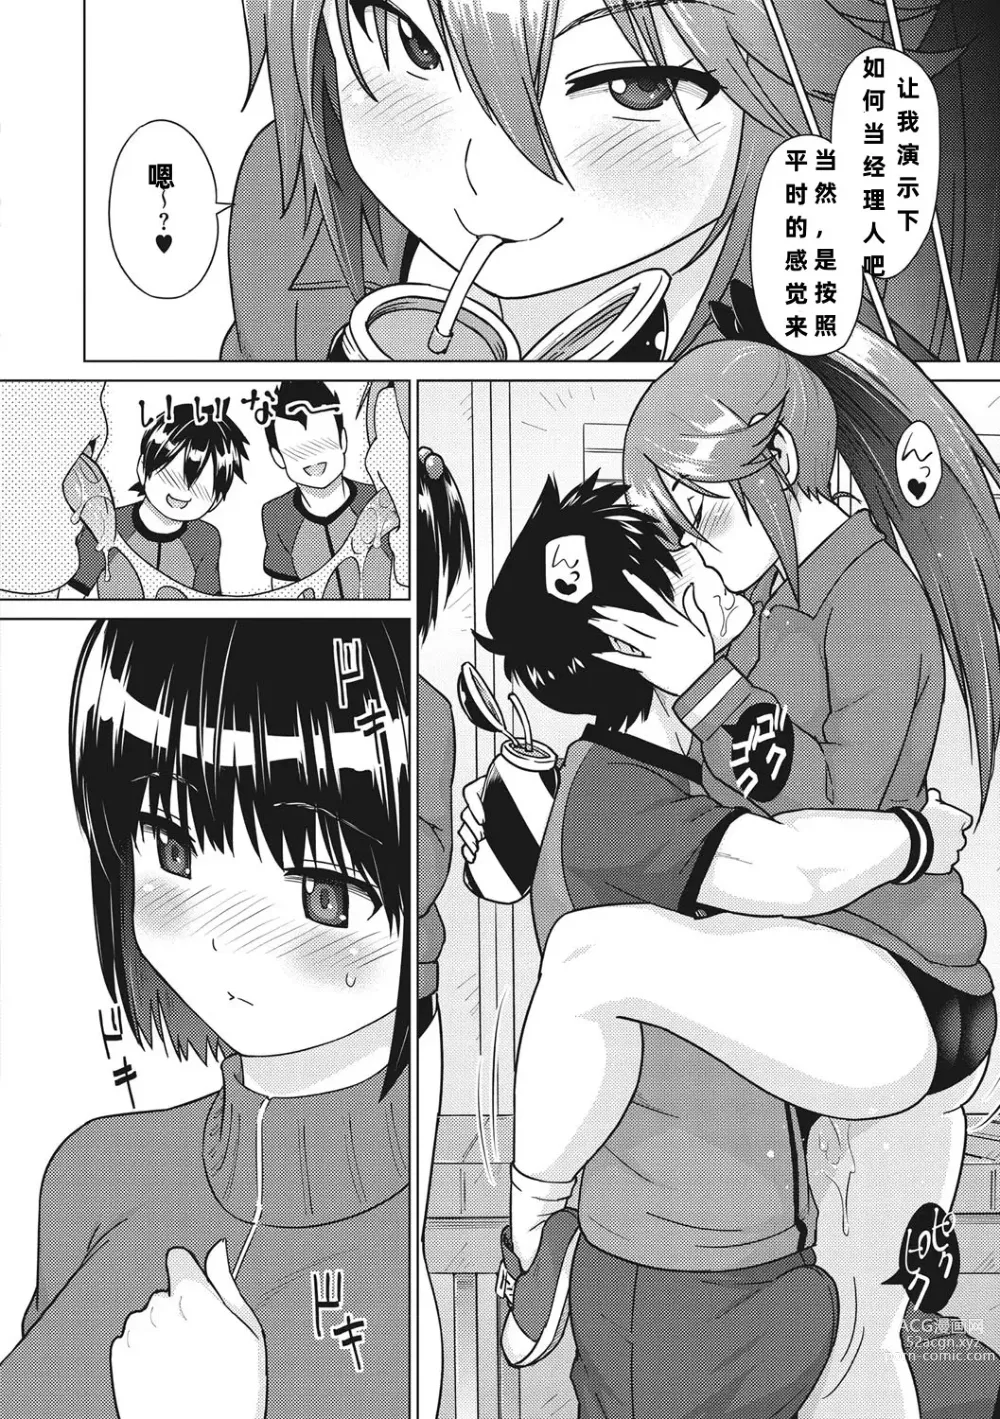 Page 5 of manga SocceMana Overcome